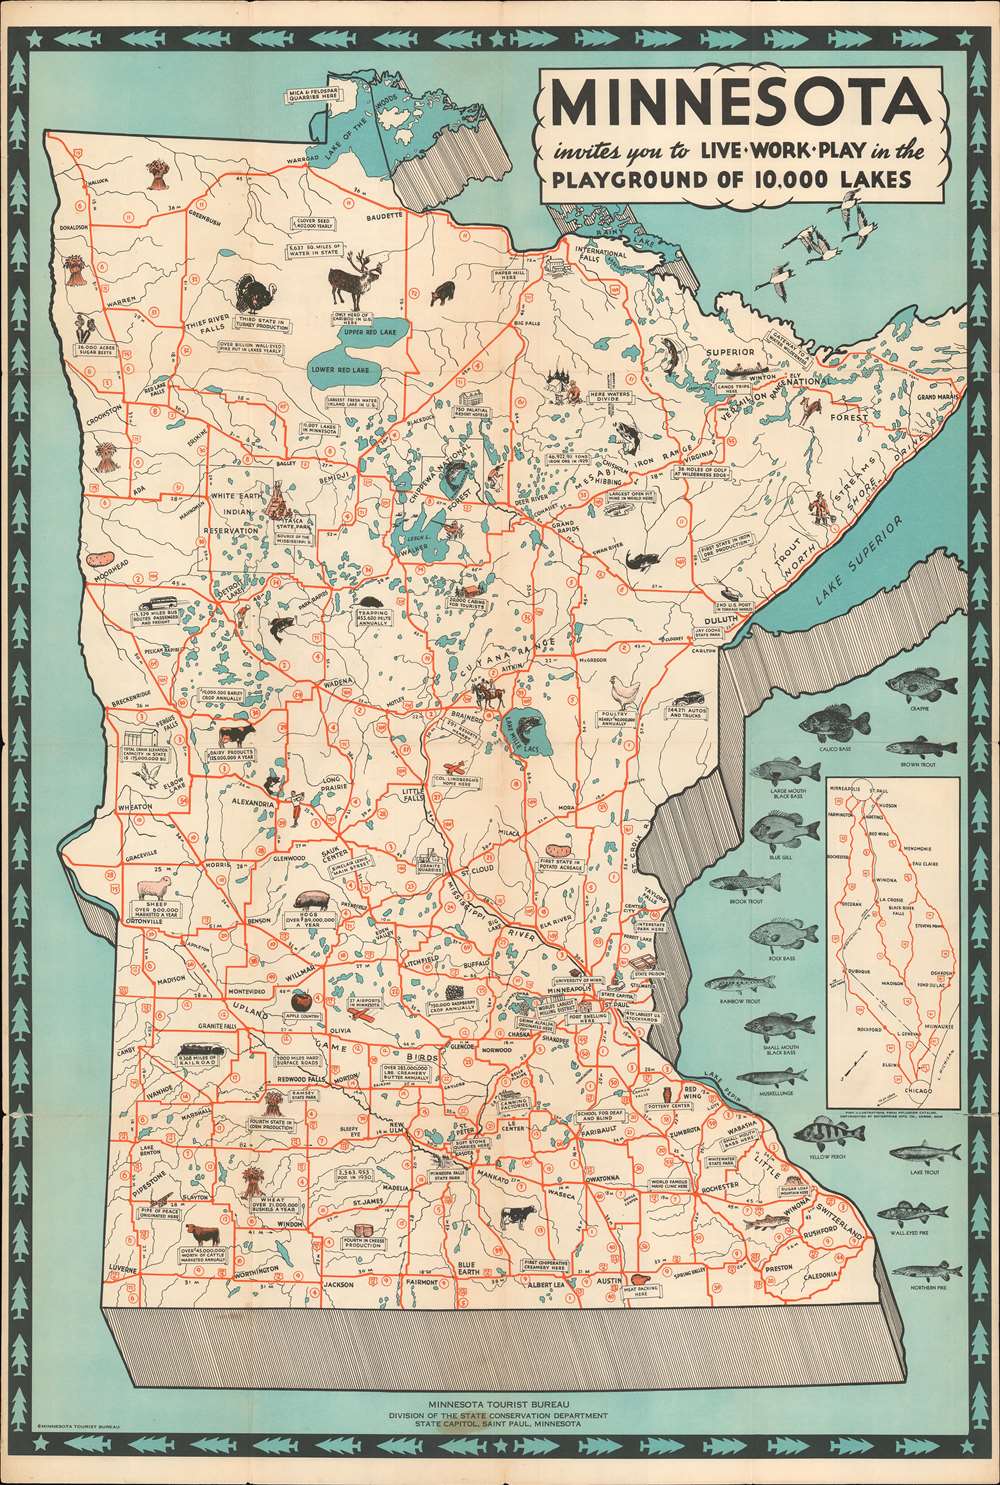 Old Map of St. Paul minnesota Saint Paul Map Fine Print 